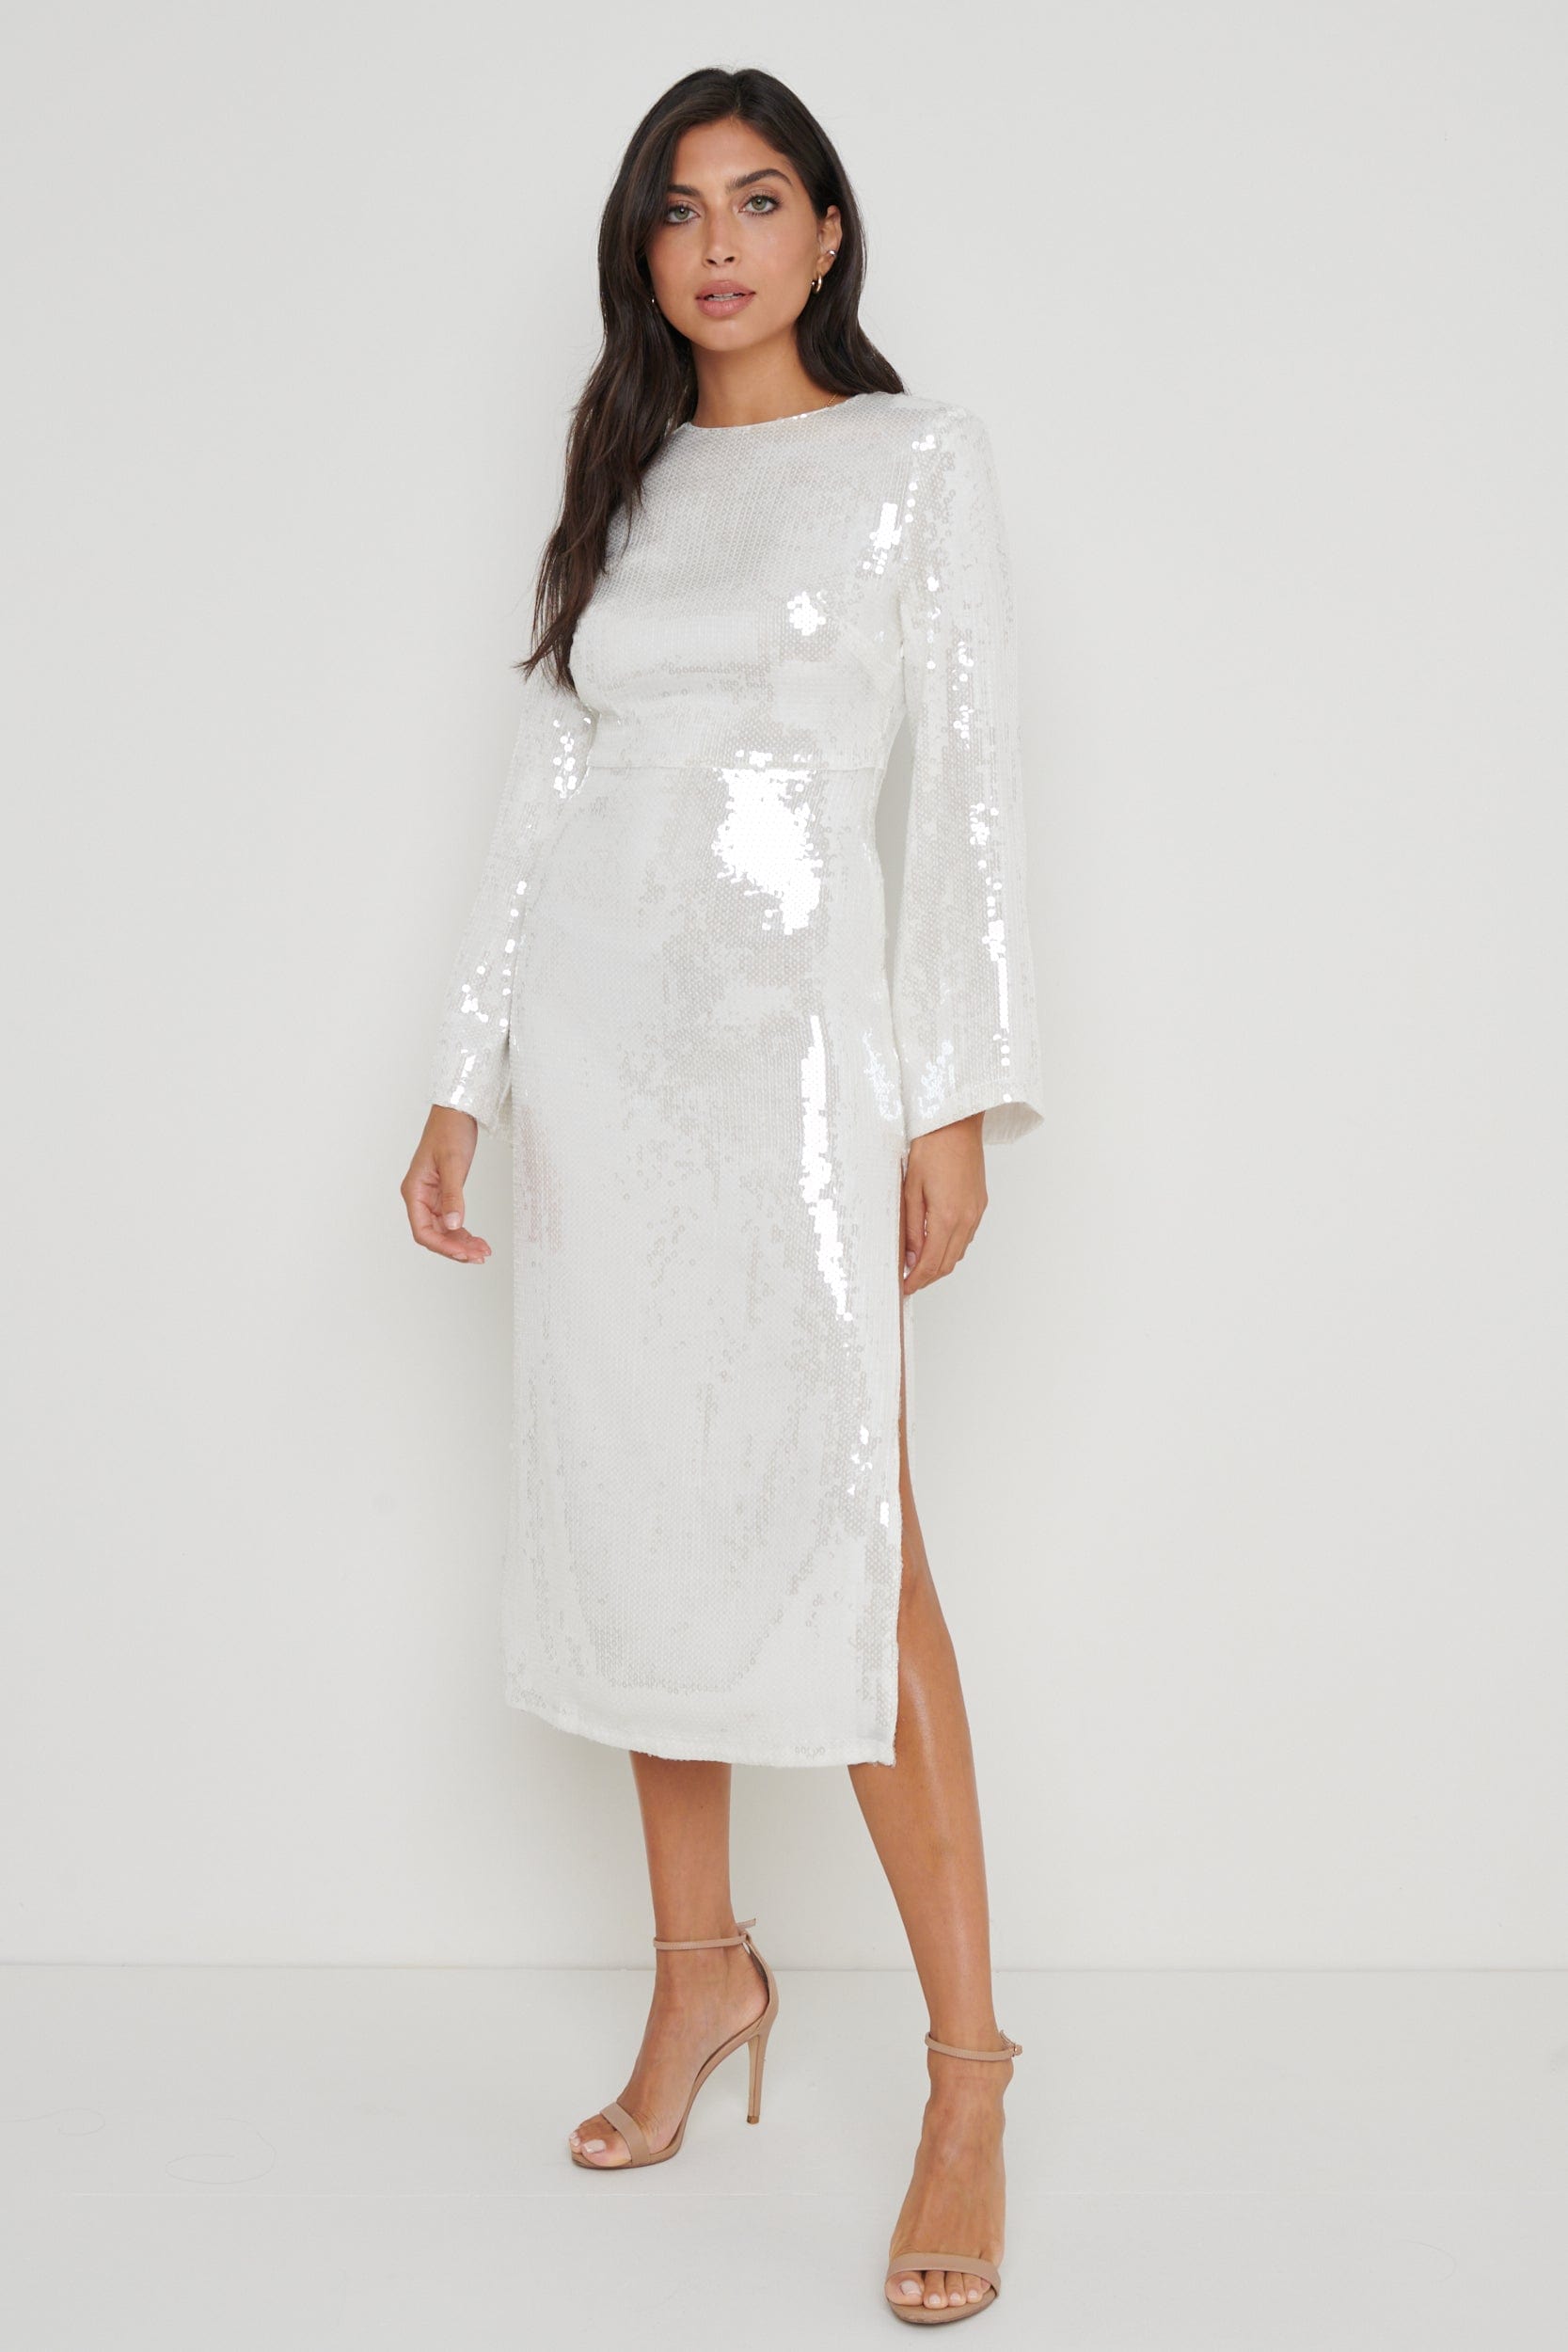 Lucia Sequin Dress - White